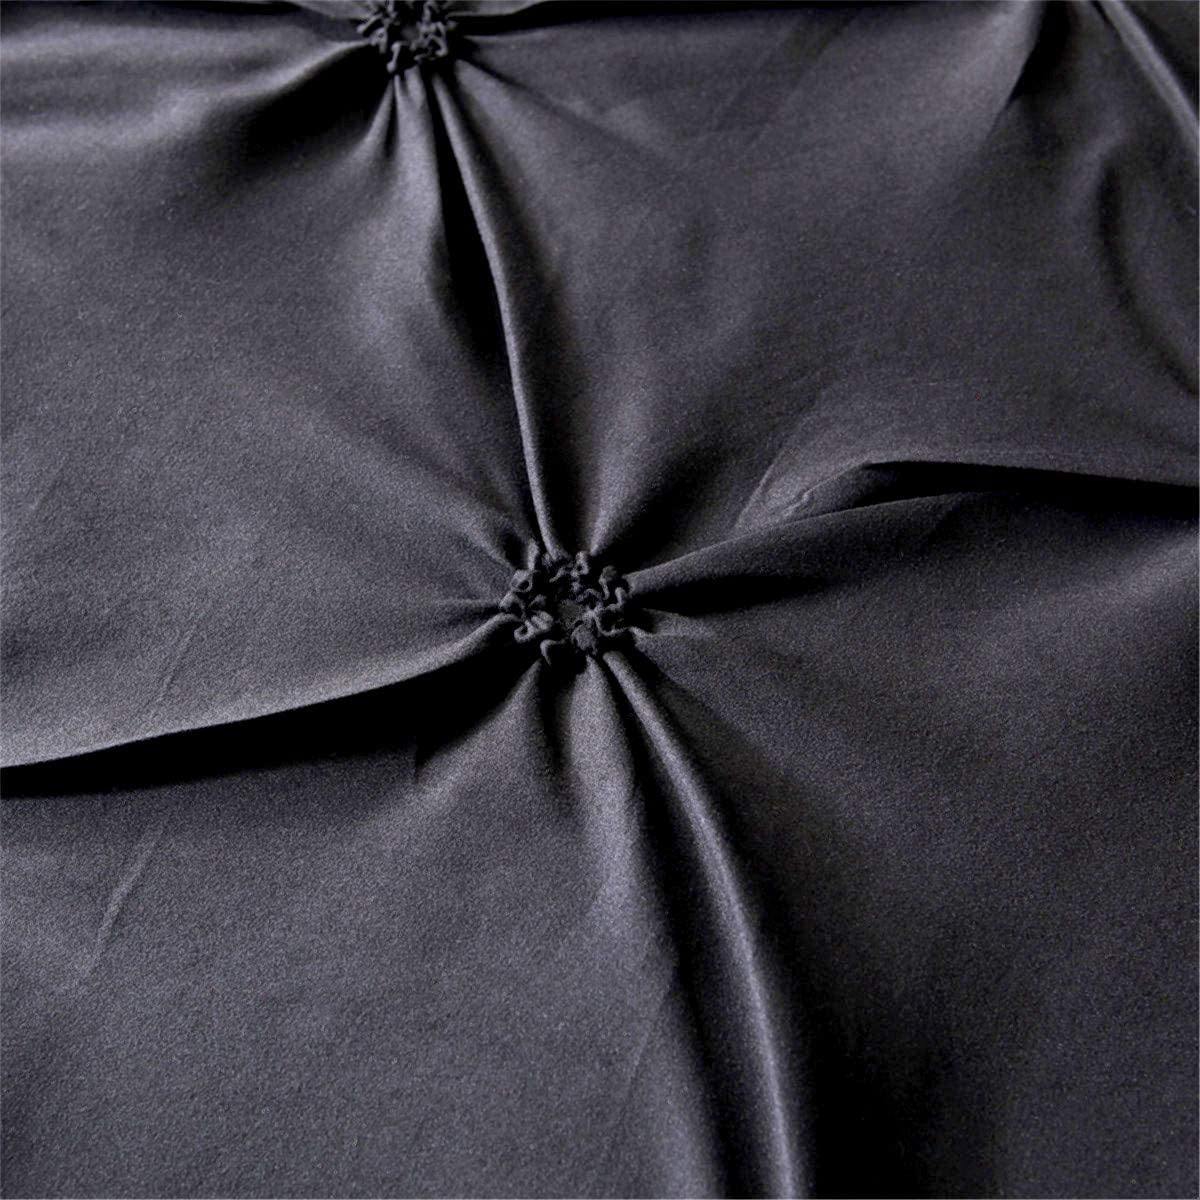 Flower pintuck black duvet set-8 pieces - DecorStudio - Duvet Cover